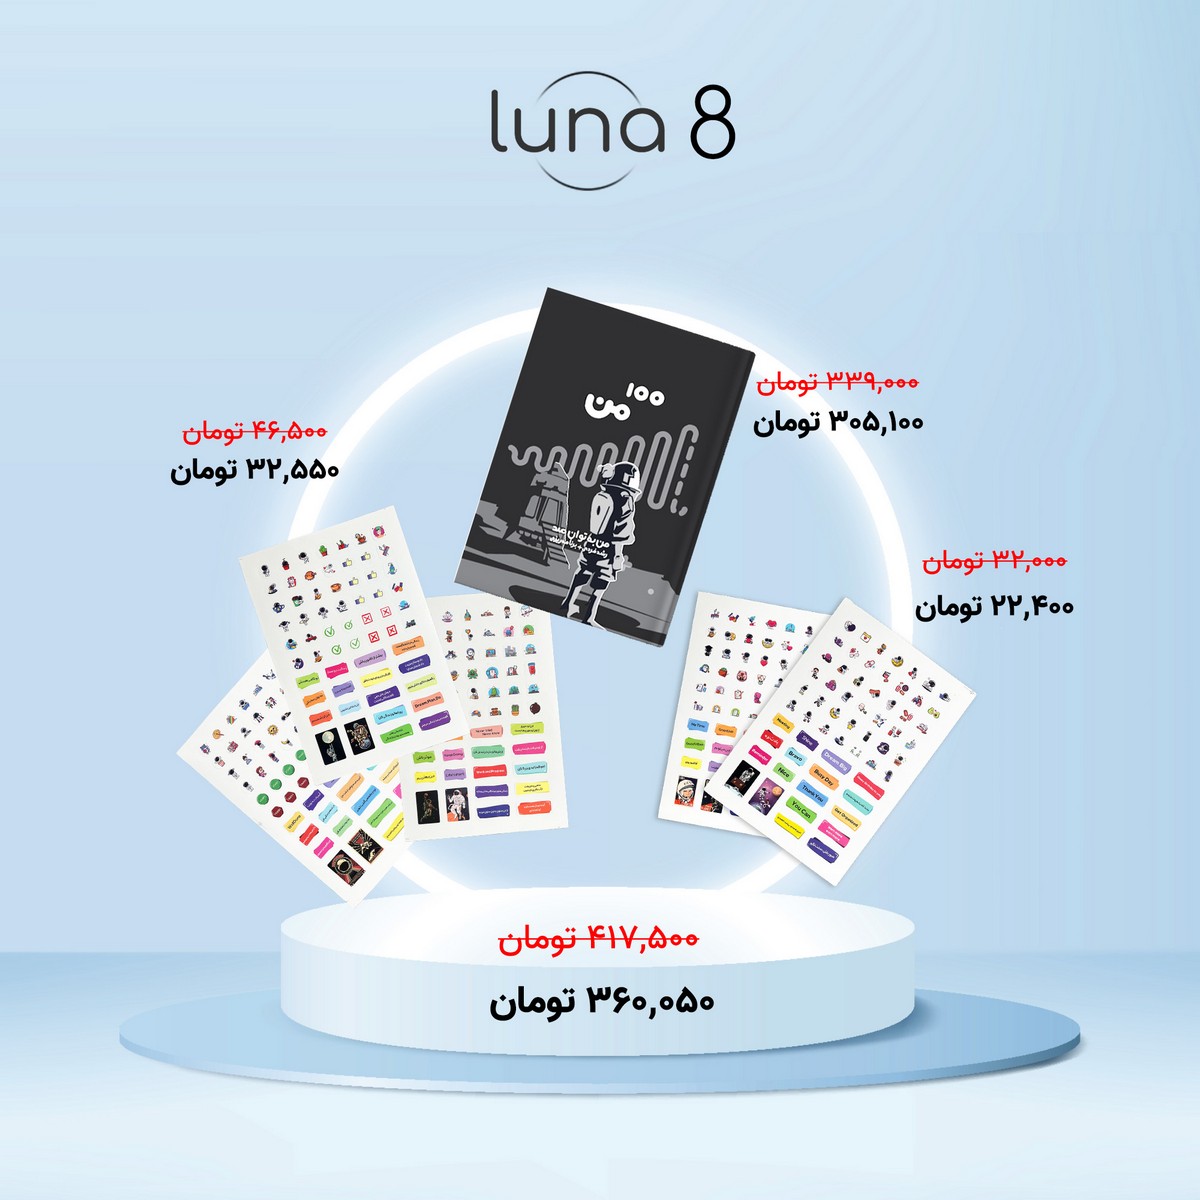 پکیج Luna 8